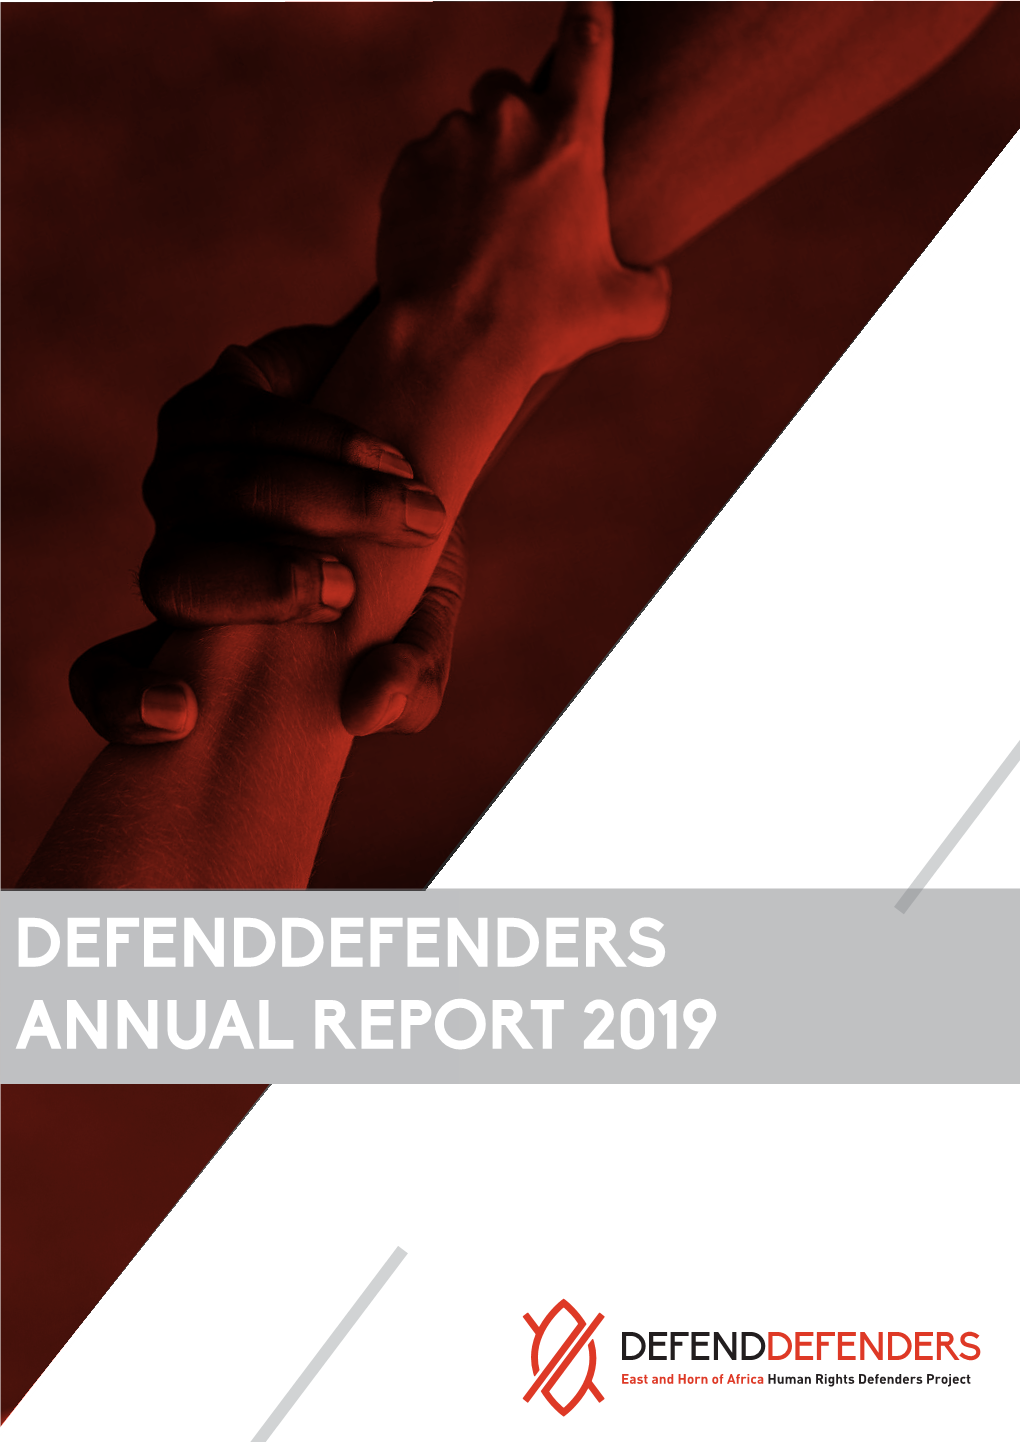 DEFENDDEFENDERS ANNUAL REPORT 2019 Defenddefenders Annual Report 2019